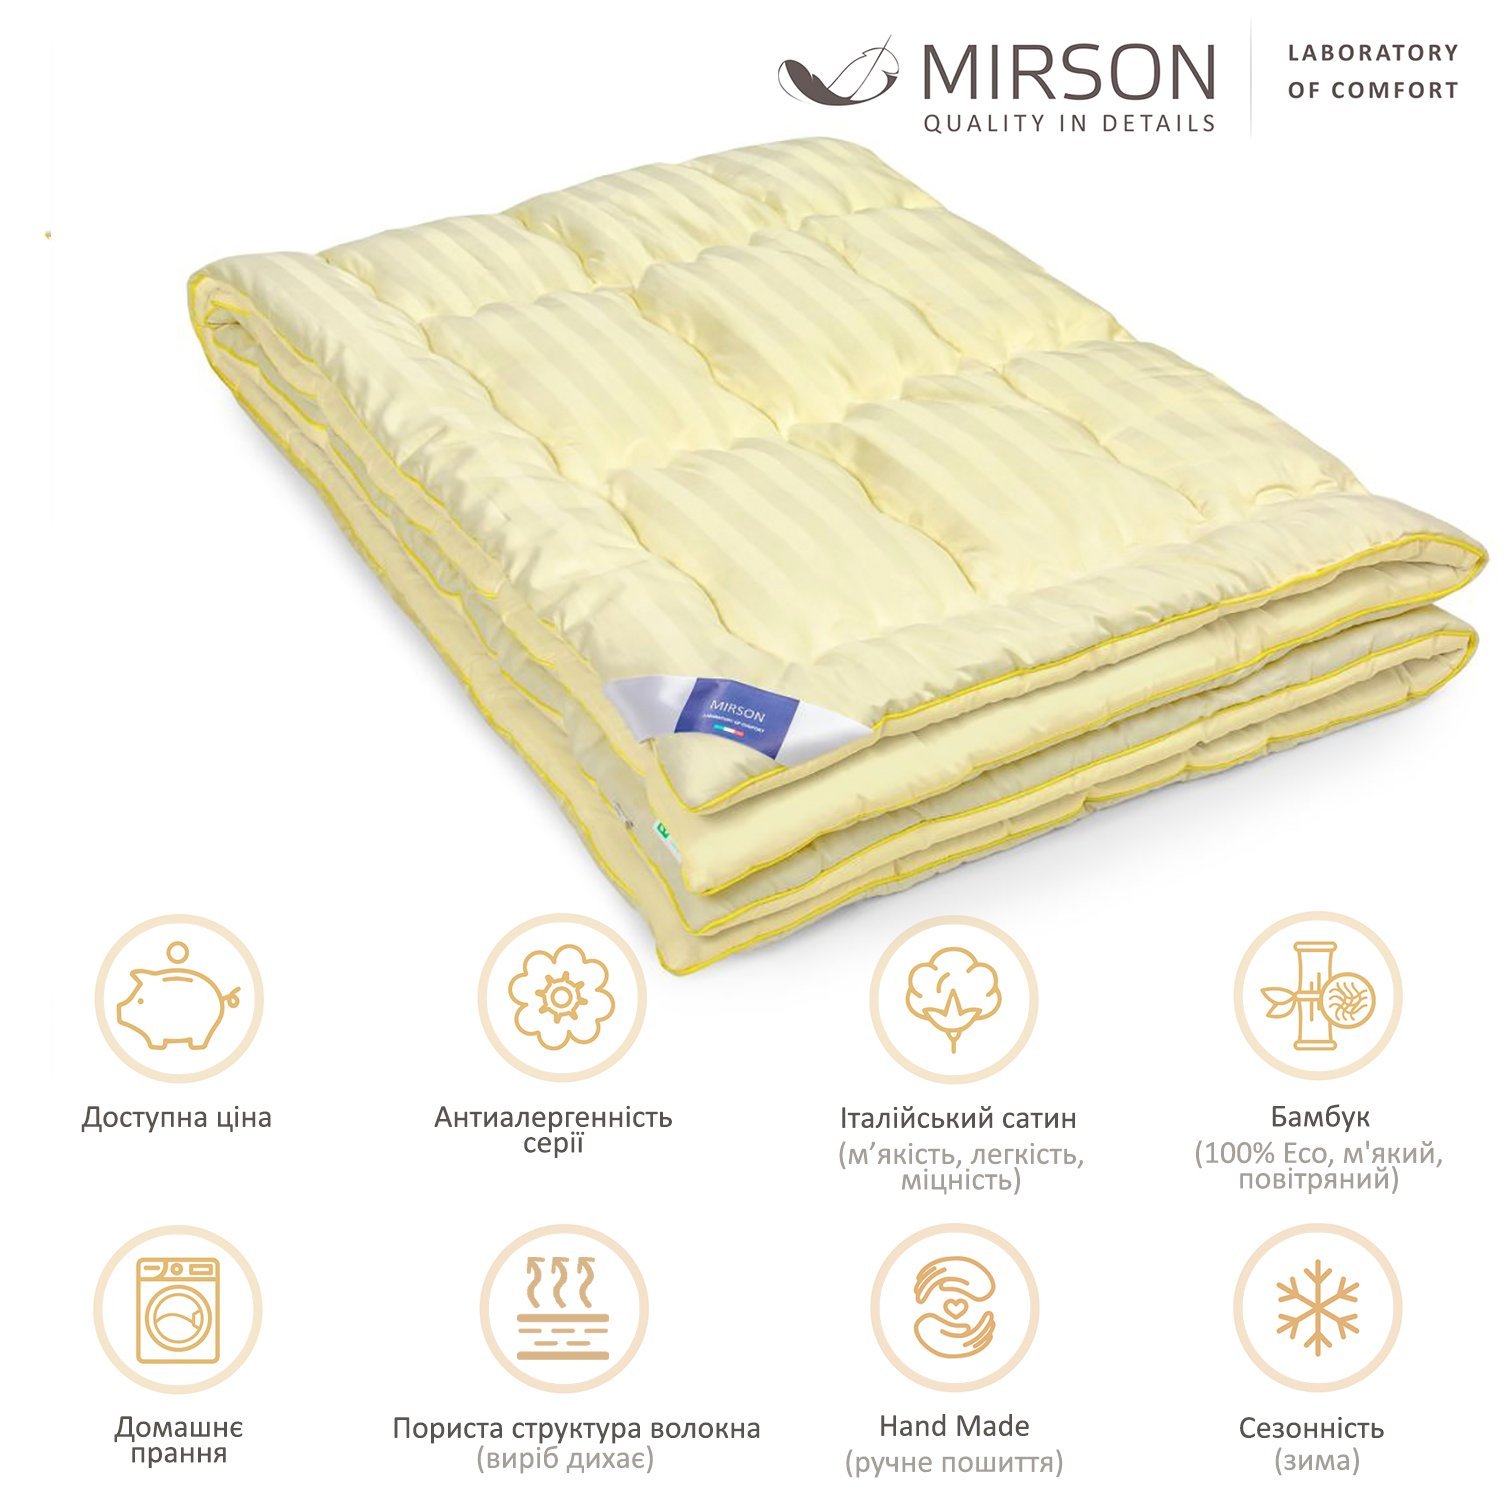 Одеяло бамбуковое MirSon Carmela Hand Made №0437, зимнее, 140x205 см, светло-желтое - фото 5